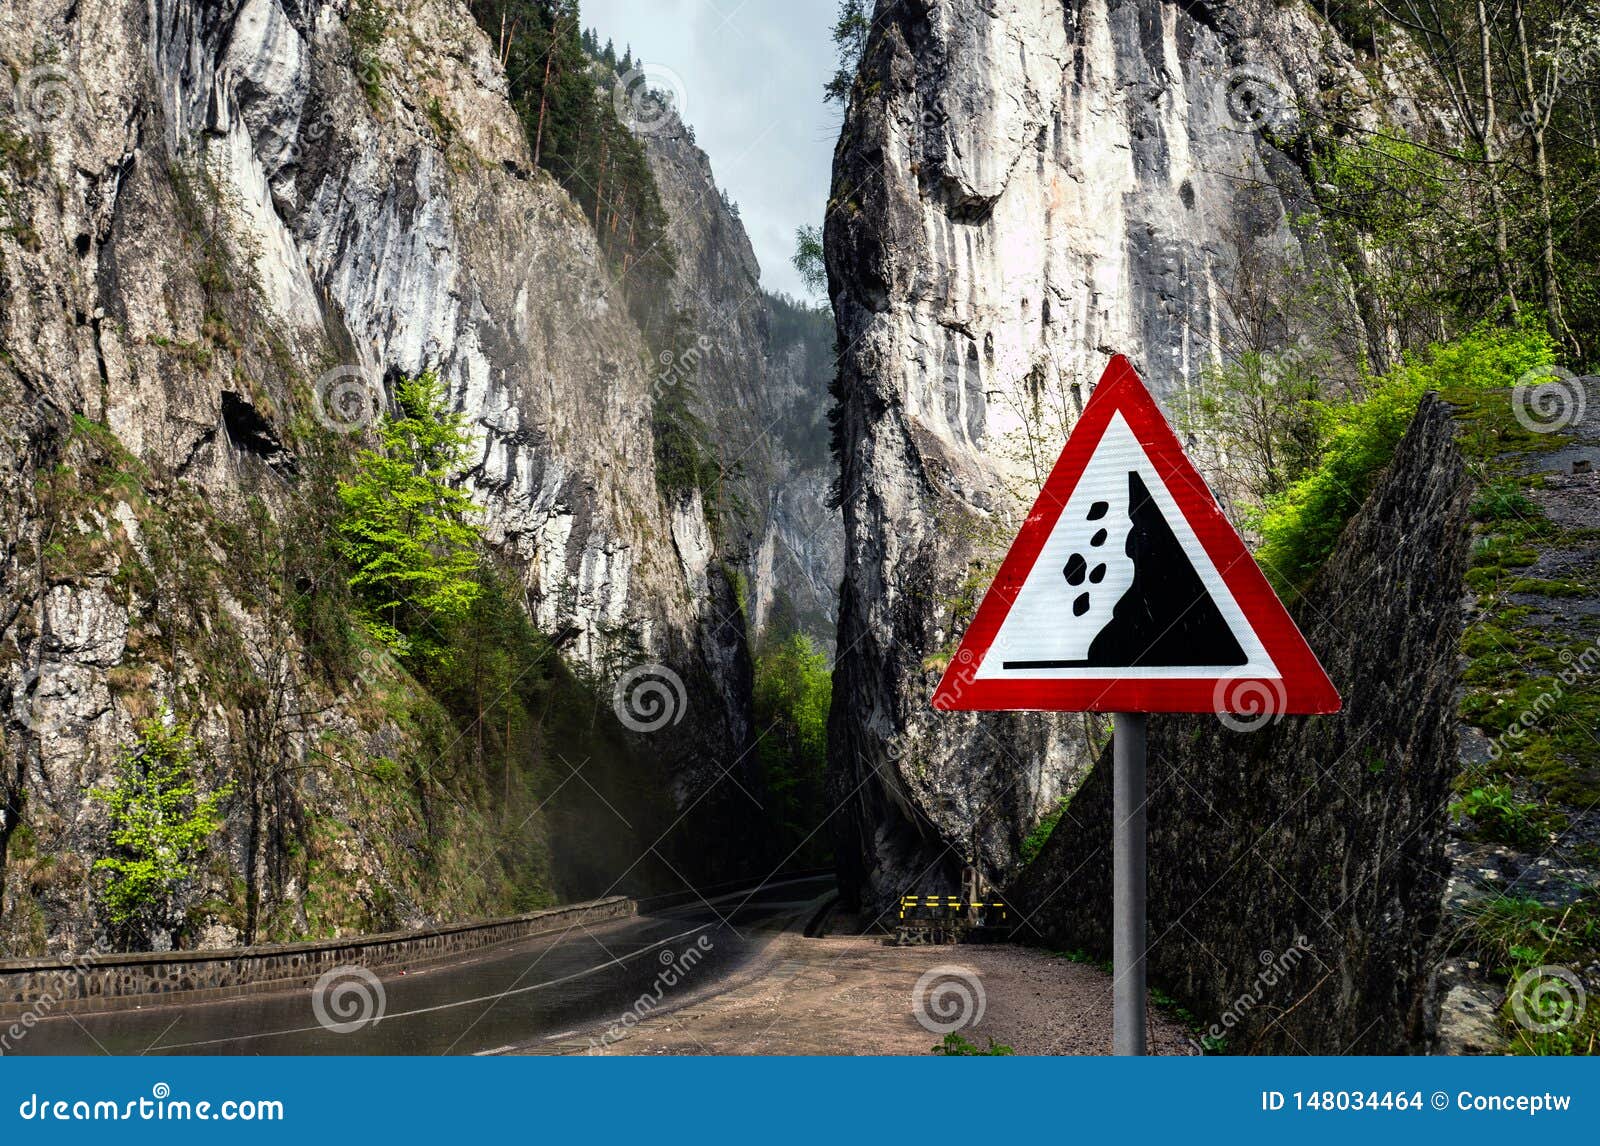 Falling Rocks Warning Sign On Mountain Road Stock Photo Image Of Street Dangerous